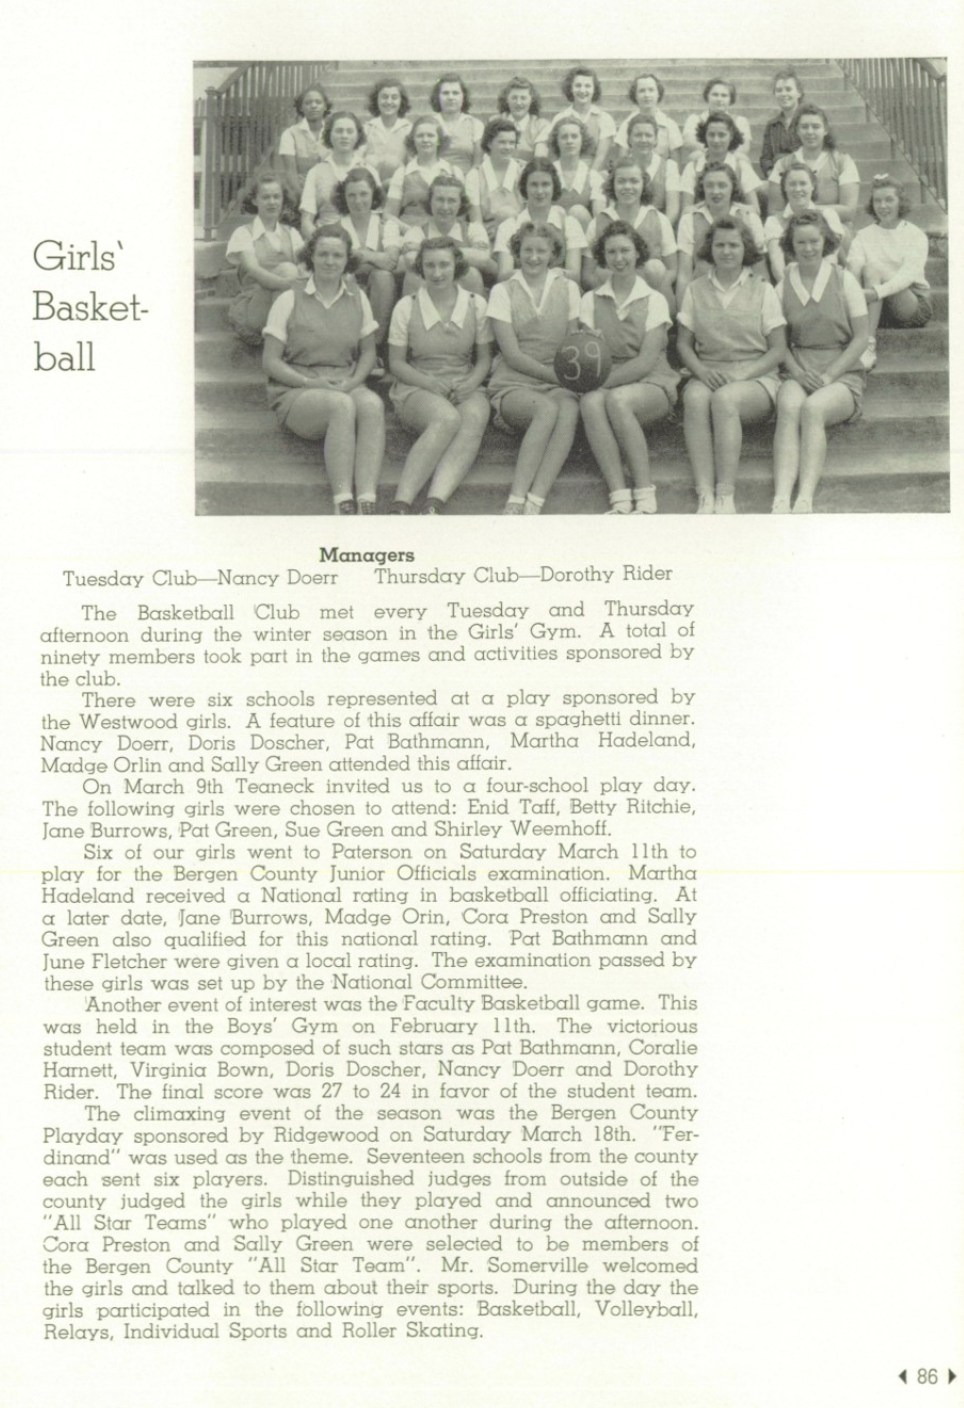 1939 Girls’ Basketball Team